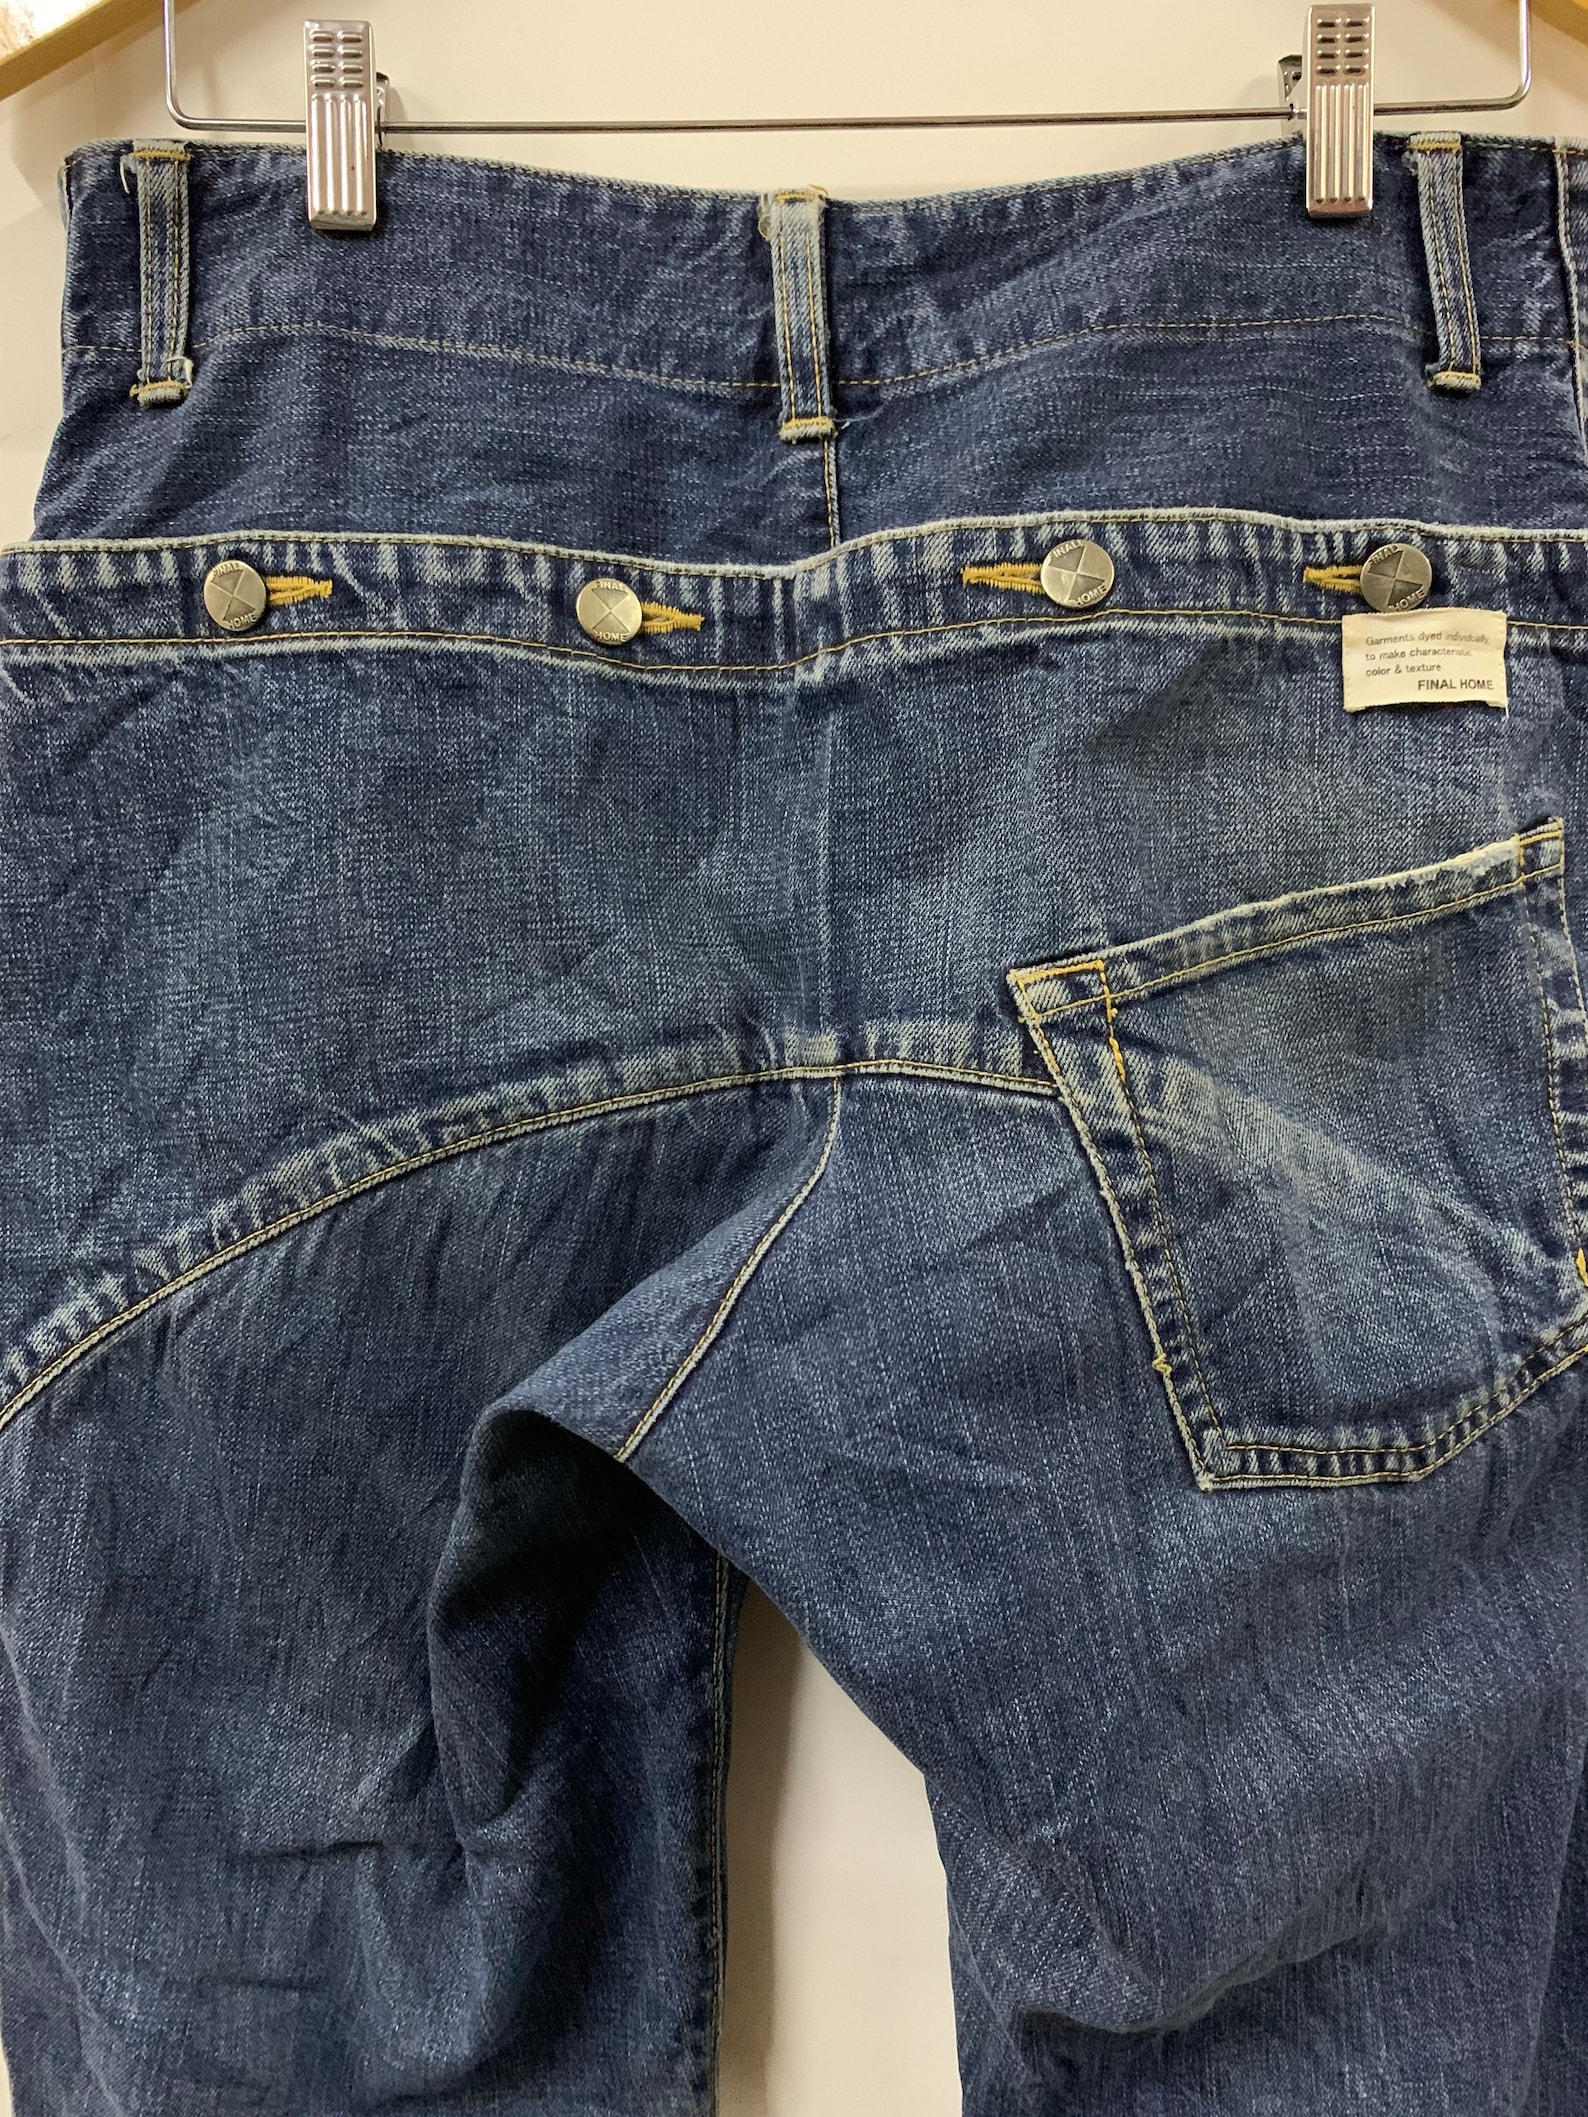 Vintage Final Home Issey Miyake Big Pocket Jeans | Etsy